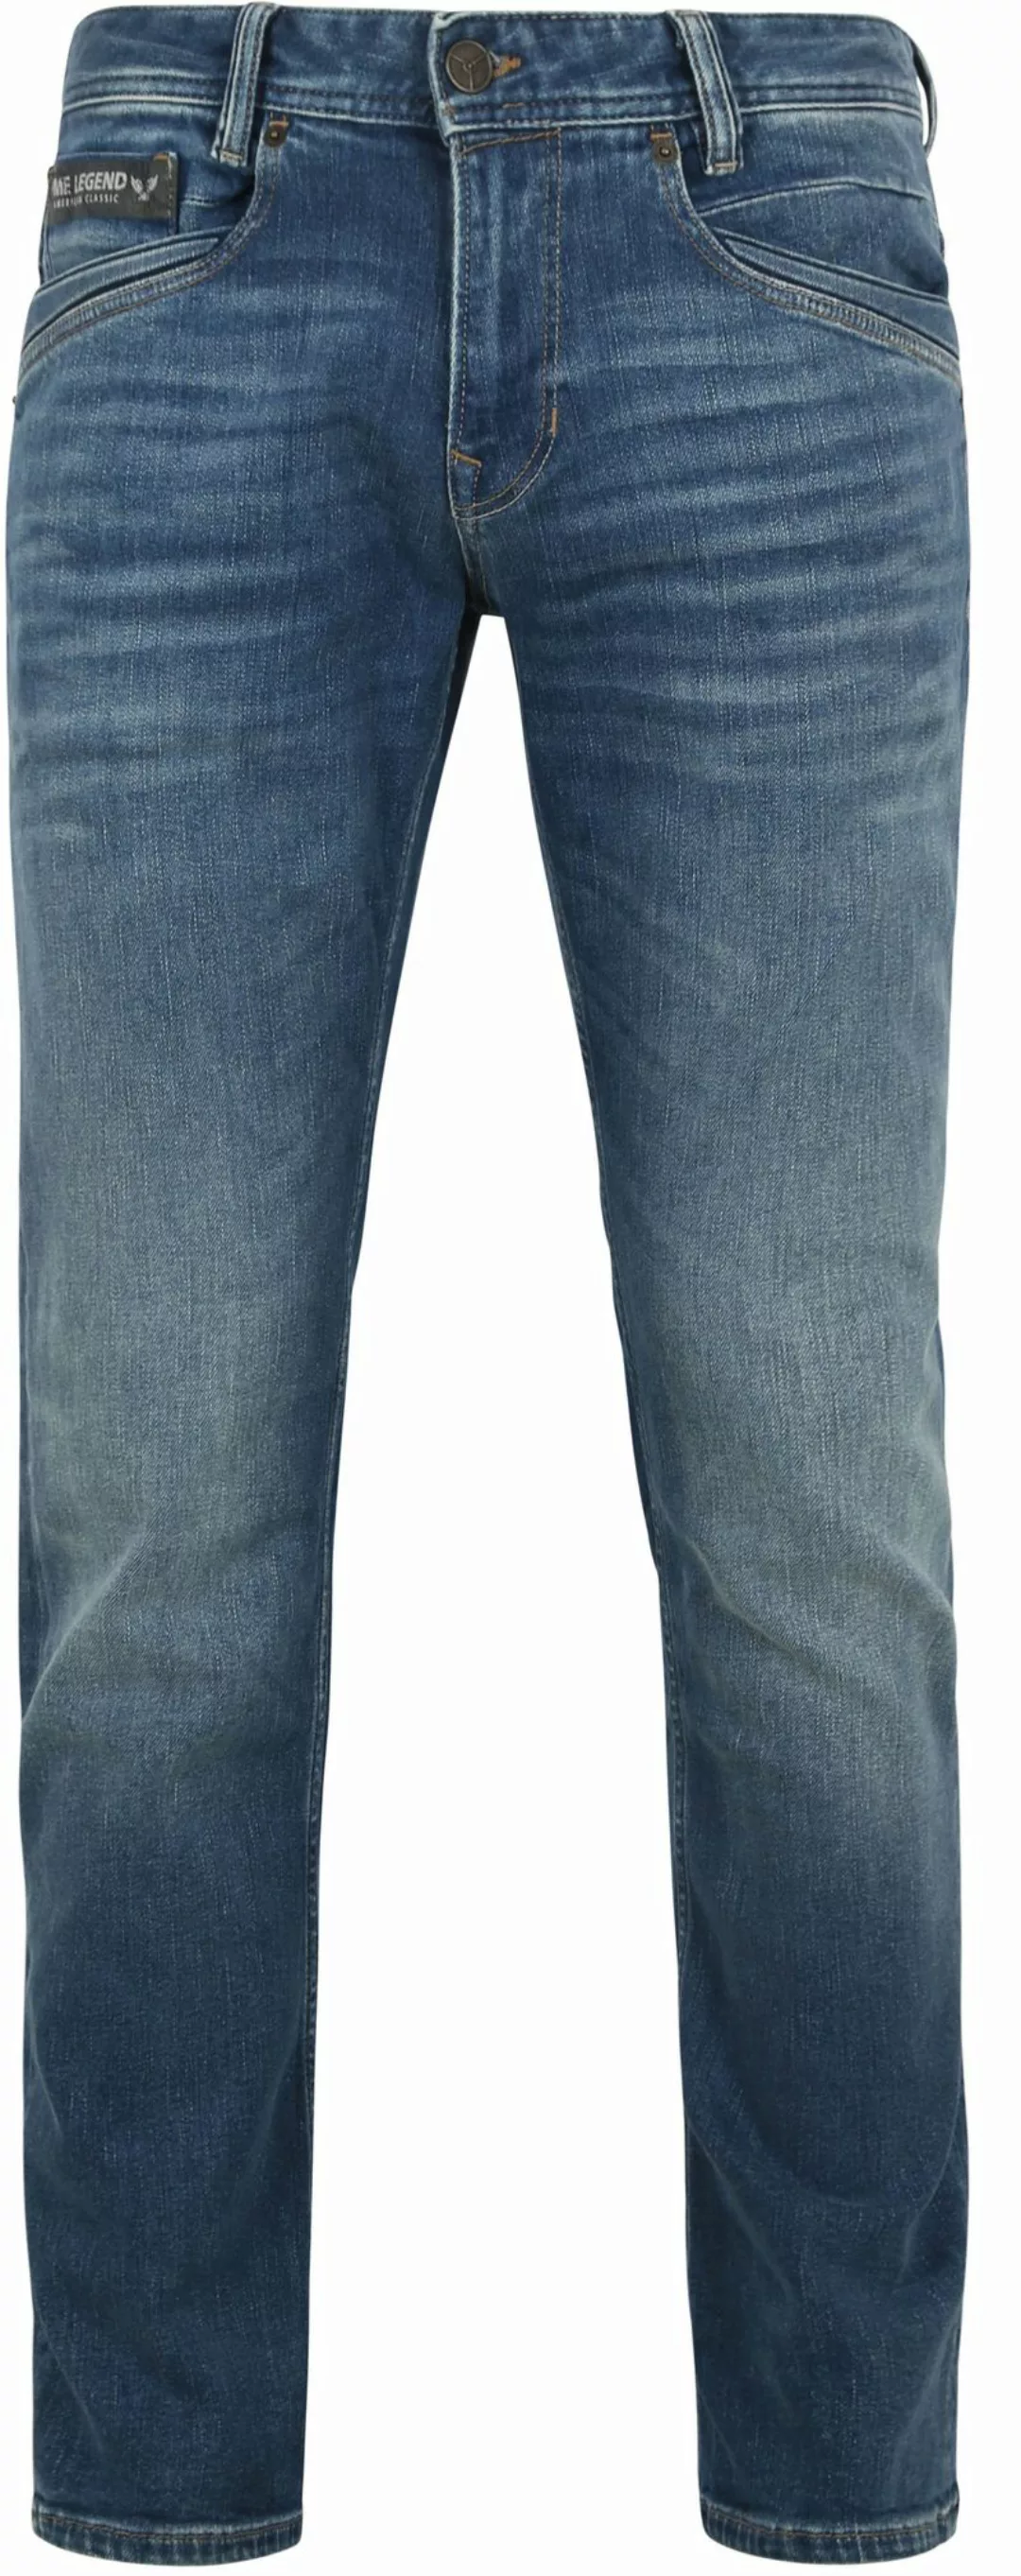 PME Legend Skyrak Jeans Blau HMB - Größe W 33 - L 36 günstig online kaufen